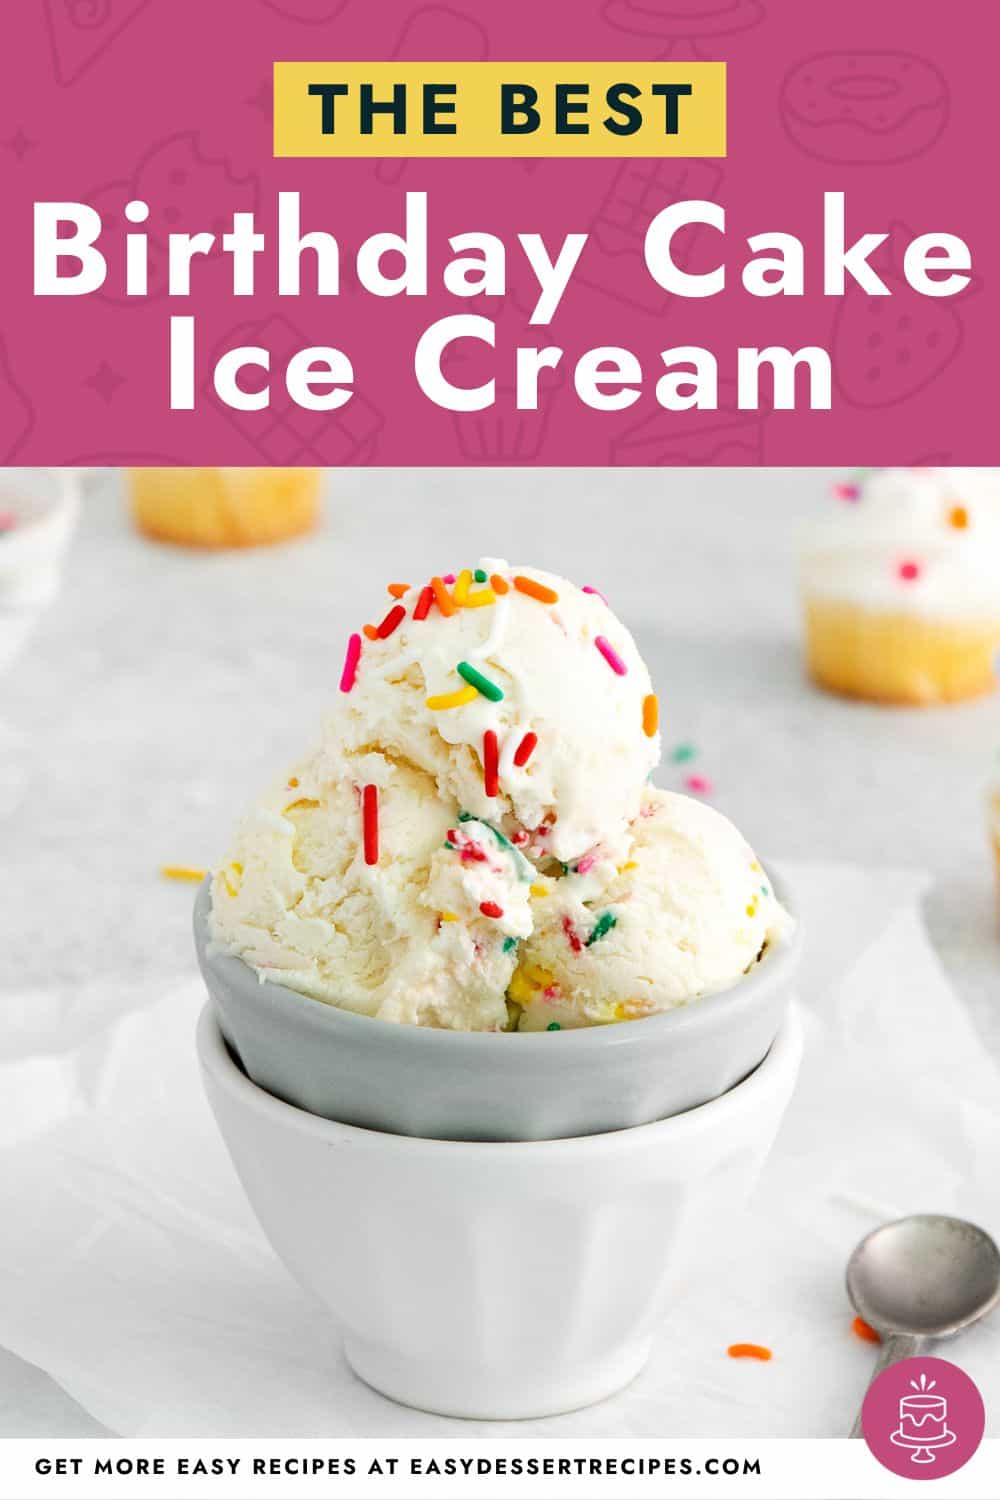 The best birthday cake ice cream.